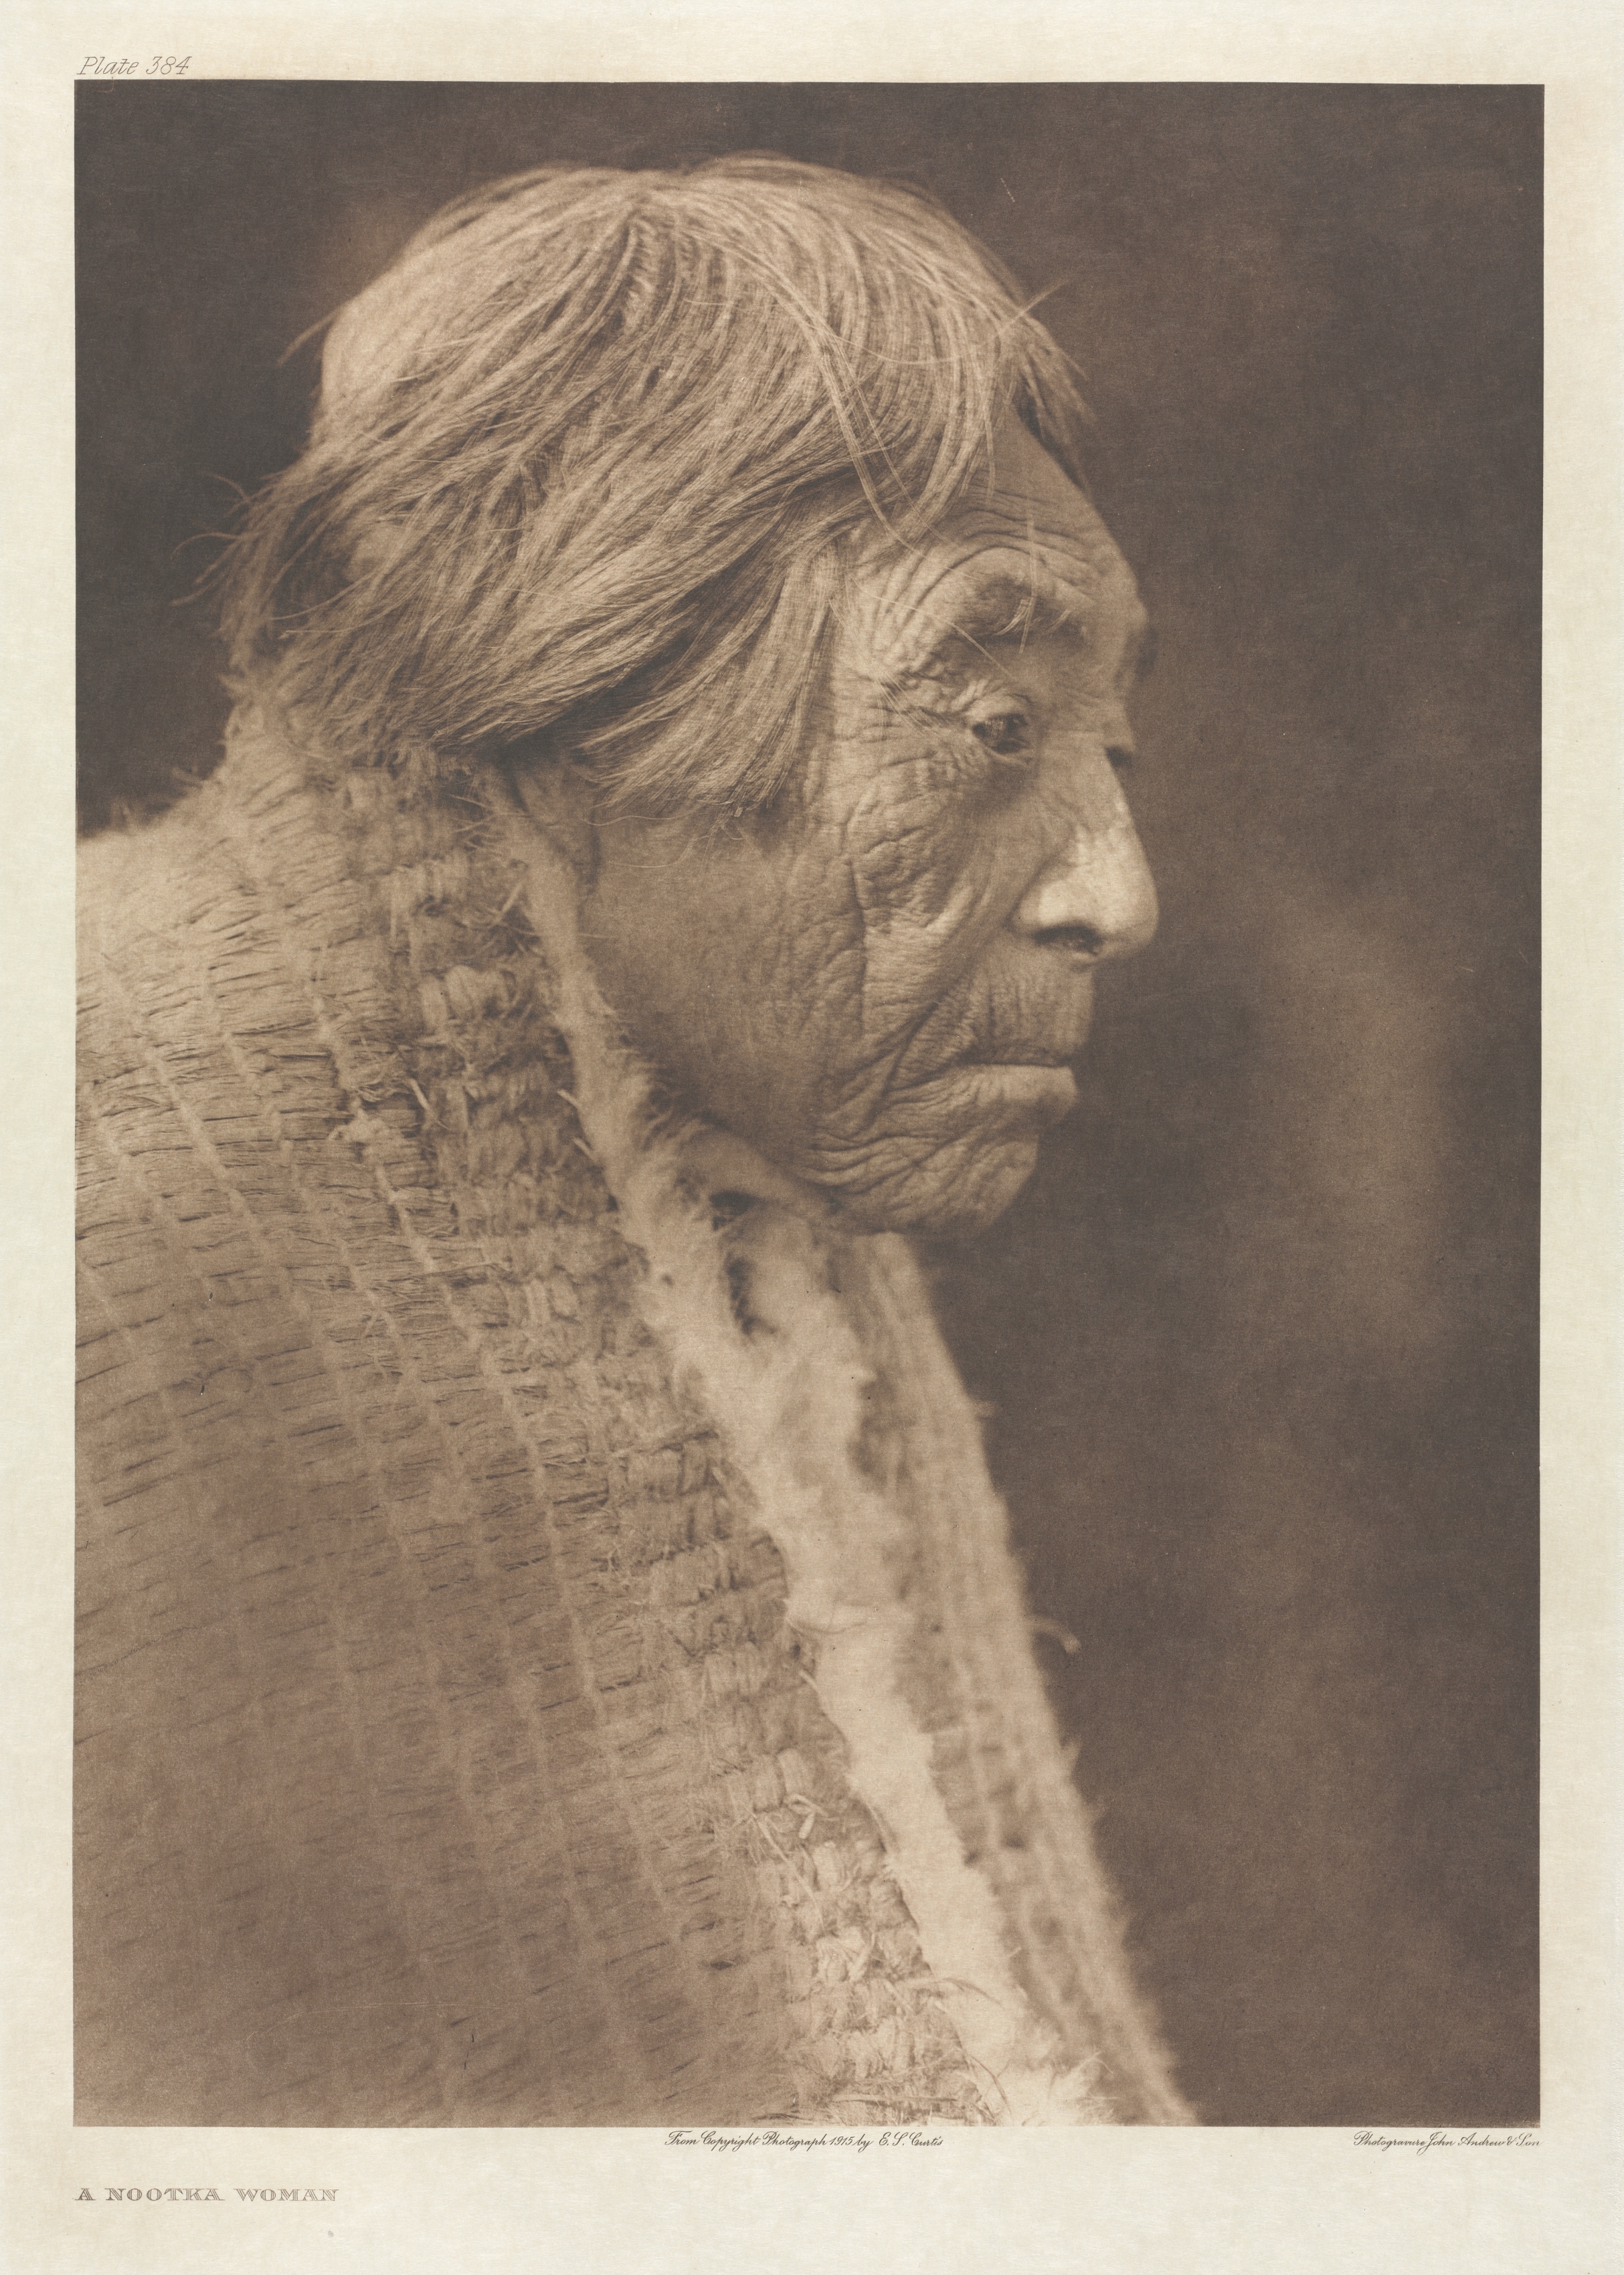 Portfolio XI, Plate 384: A Nootka Woman